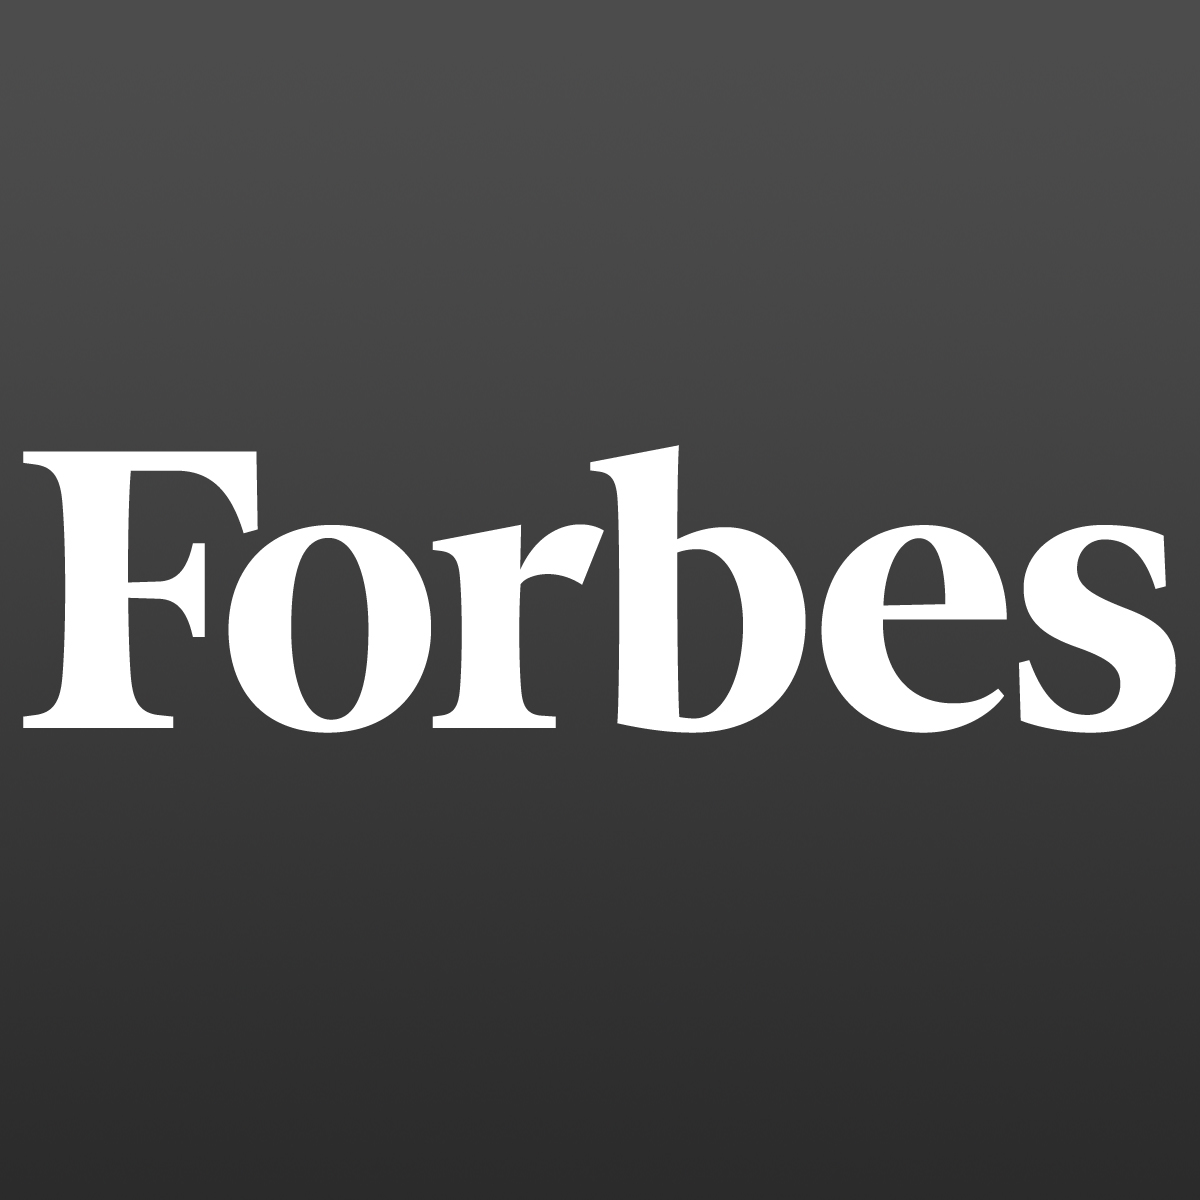 Mises Brasil lidera o Instagram segundo a Forbes